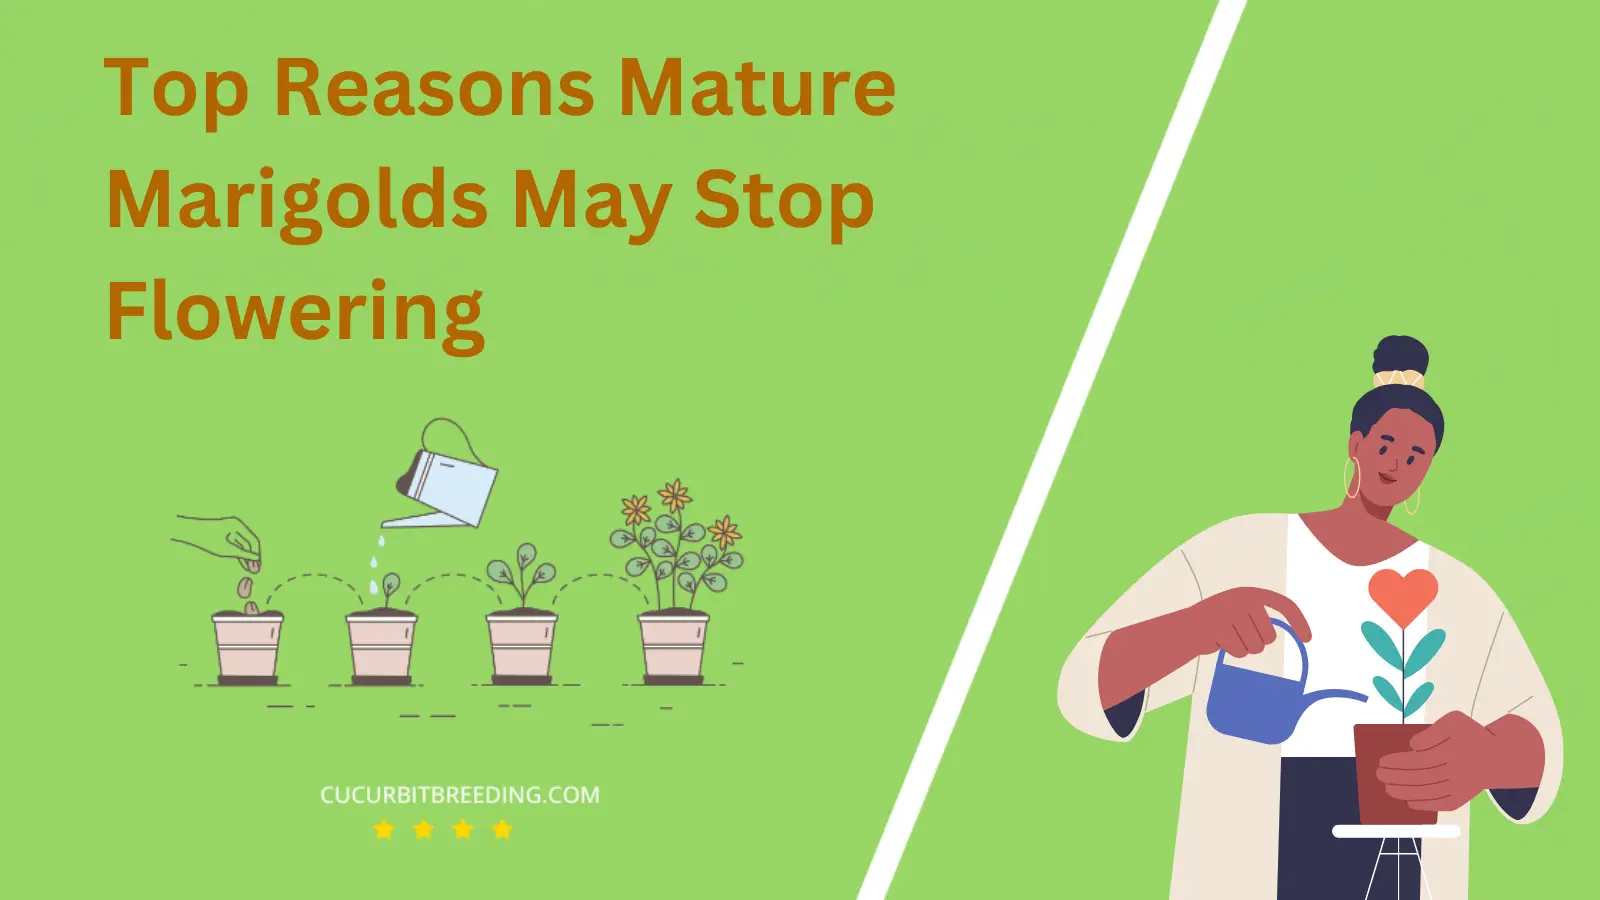 Top Reasons Mature Marigolds May Stop Flowering